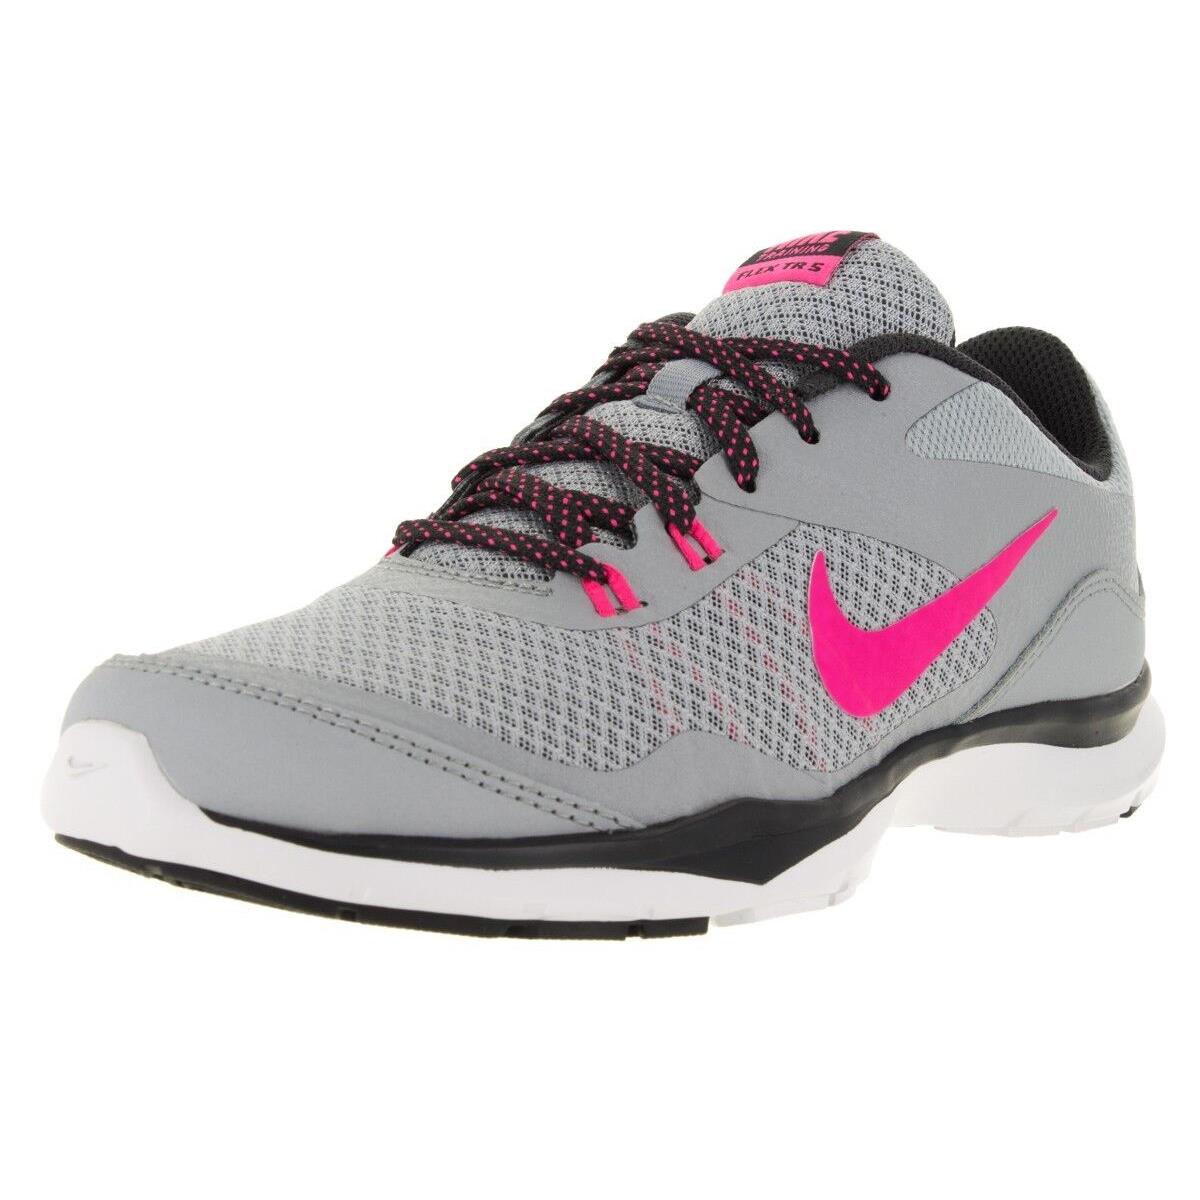 Nike Wmns Nike Flex Trainer 5 Wolf Grey Hyper Pink 724858-017 Women`s Shoes - Wolf Grey/Hyper Pink